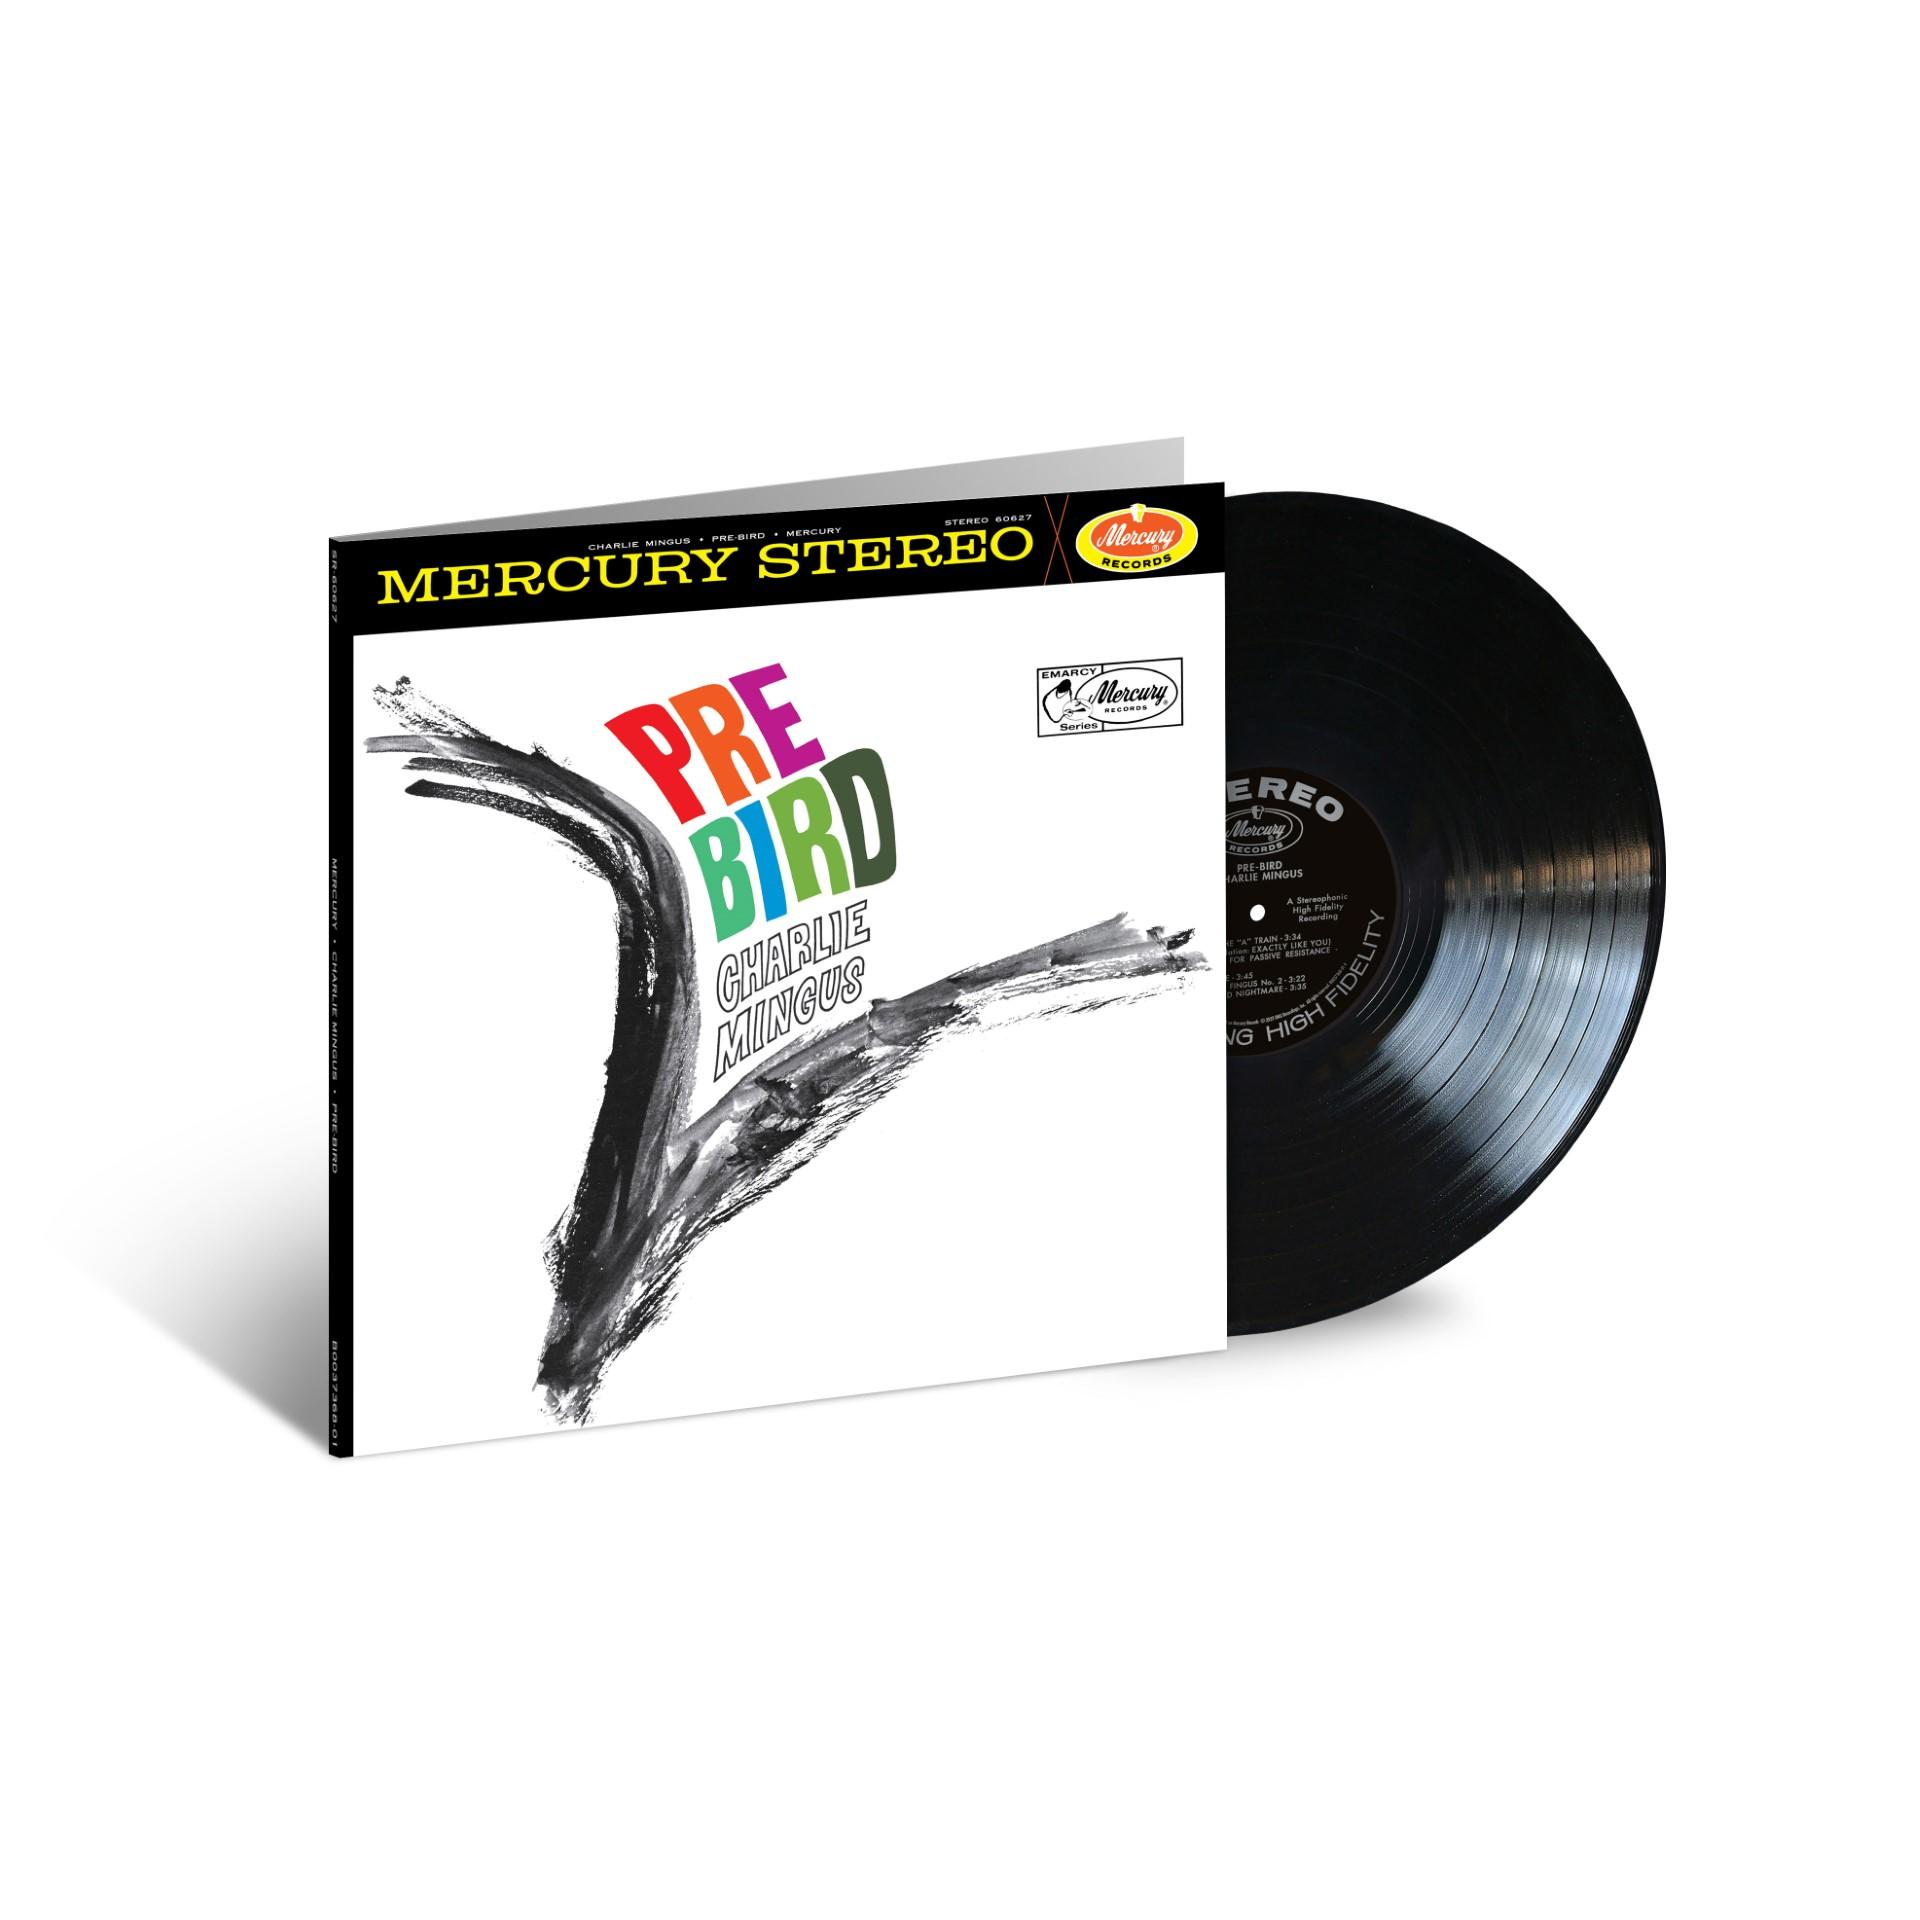 Charles Mingus - Pre-Bird (Acoustic Sounds) (Vinyl) 